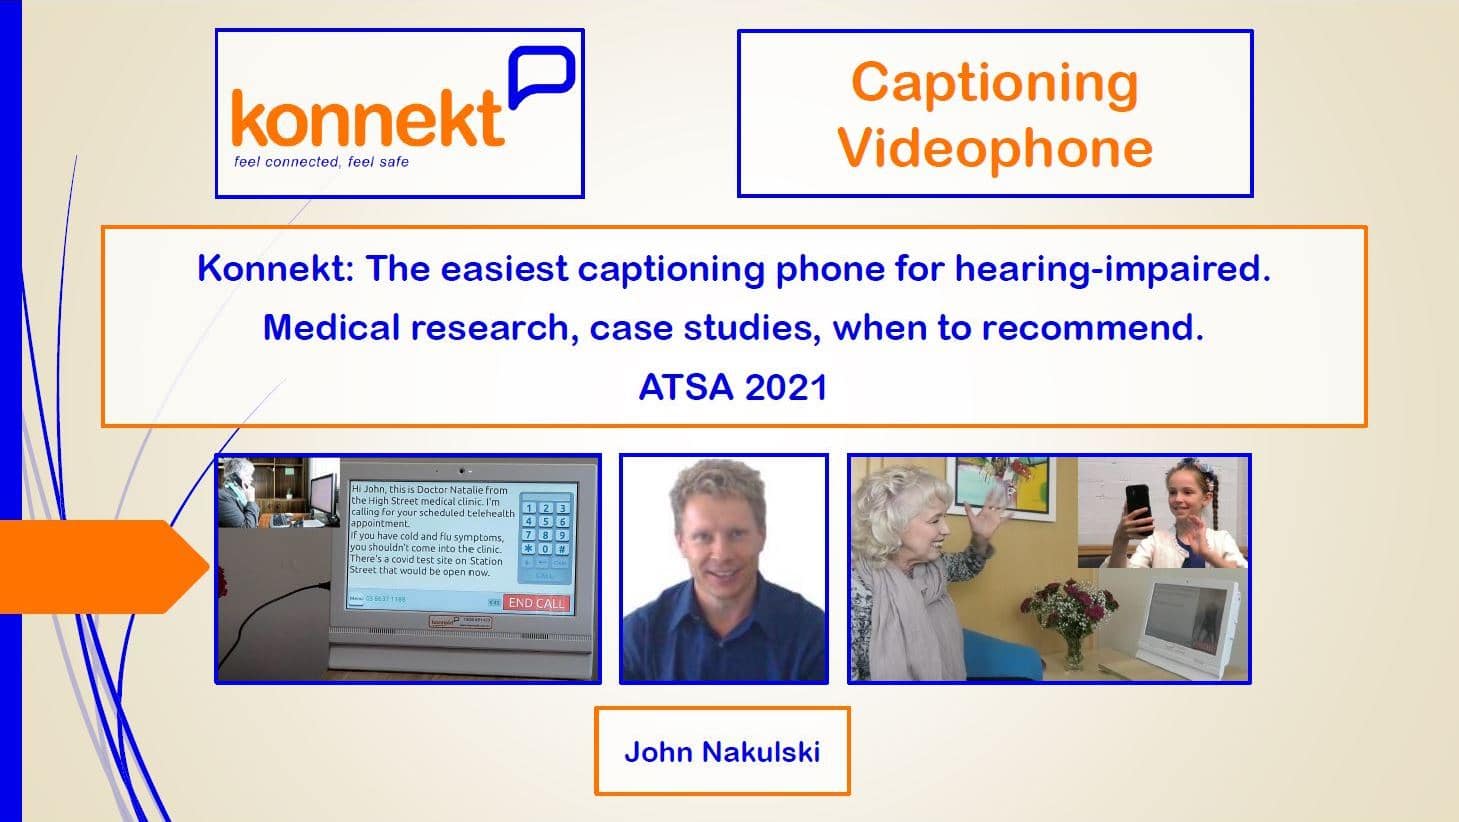 Presentación del seminario ATSA 2021 por Konnekt